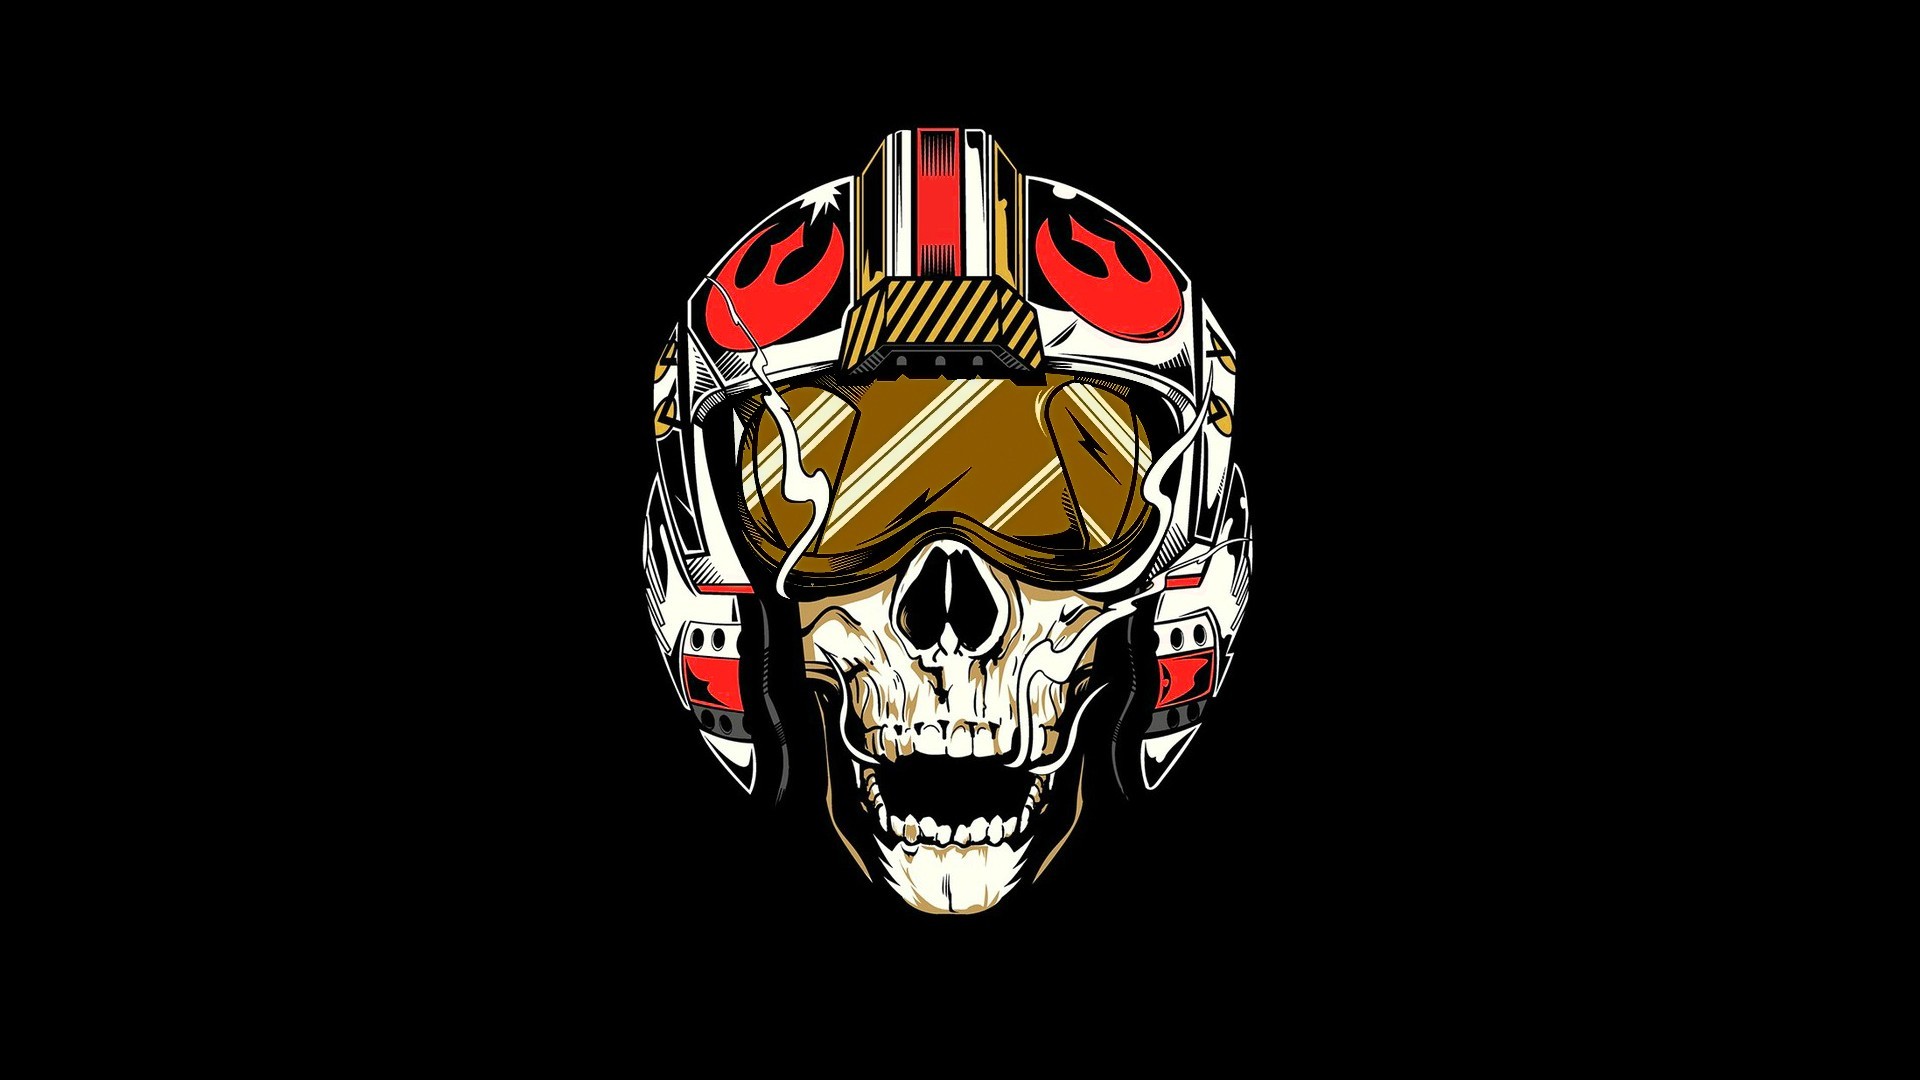 Star Wars Rebel Alliance Pilot Skull 1920x1080